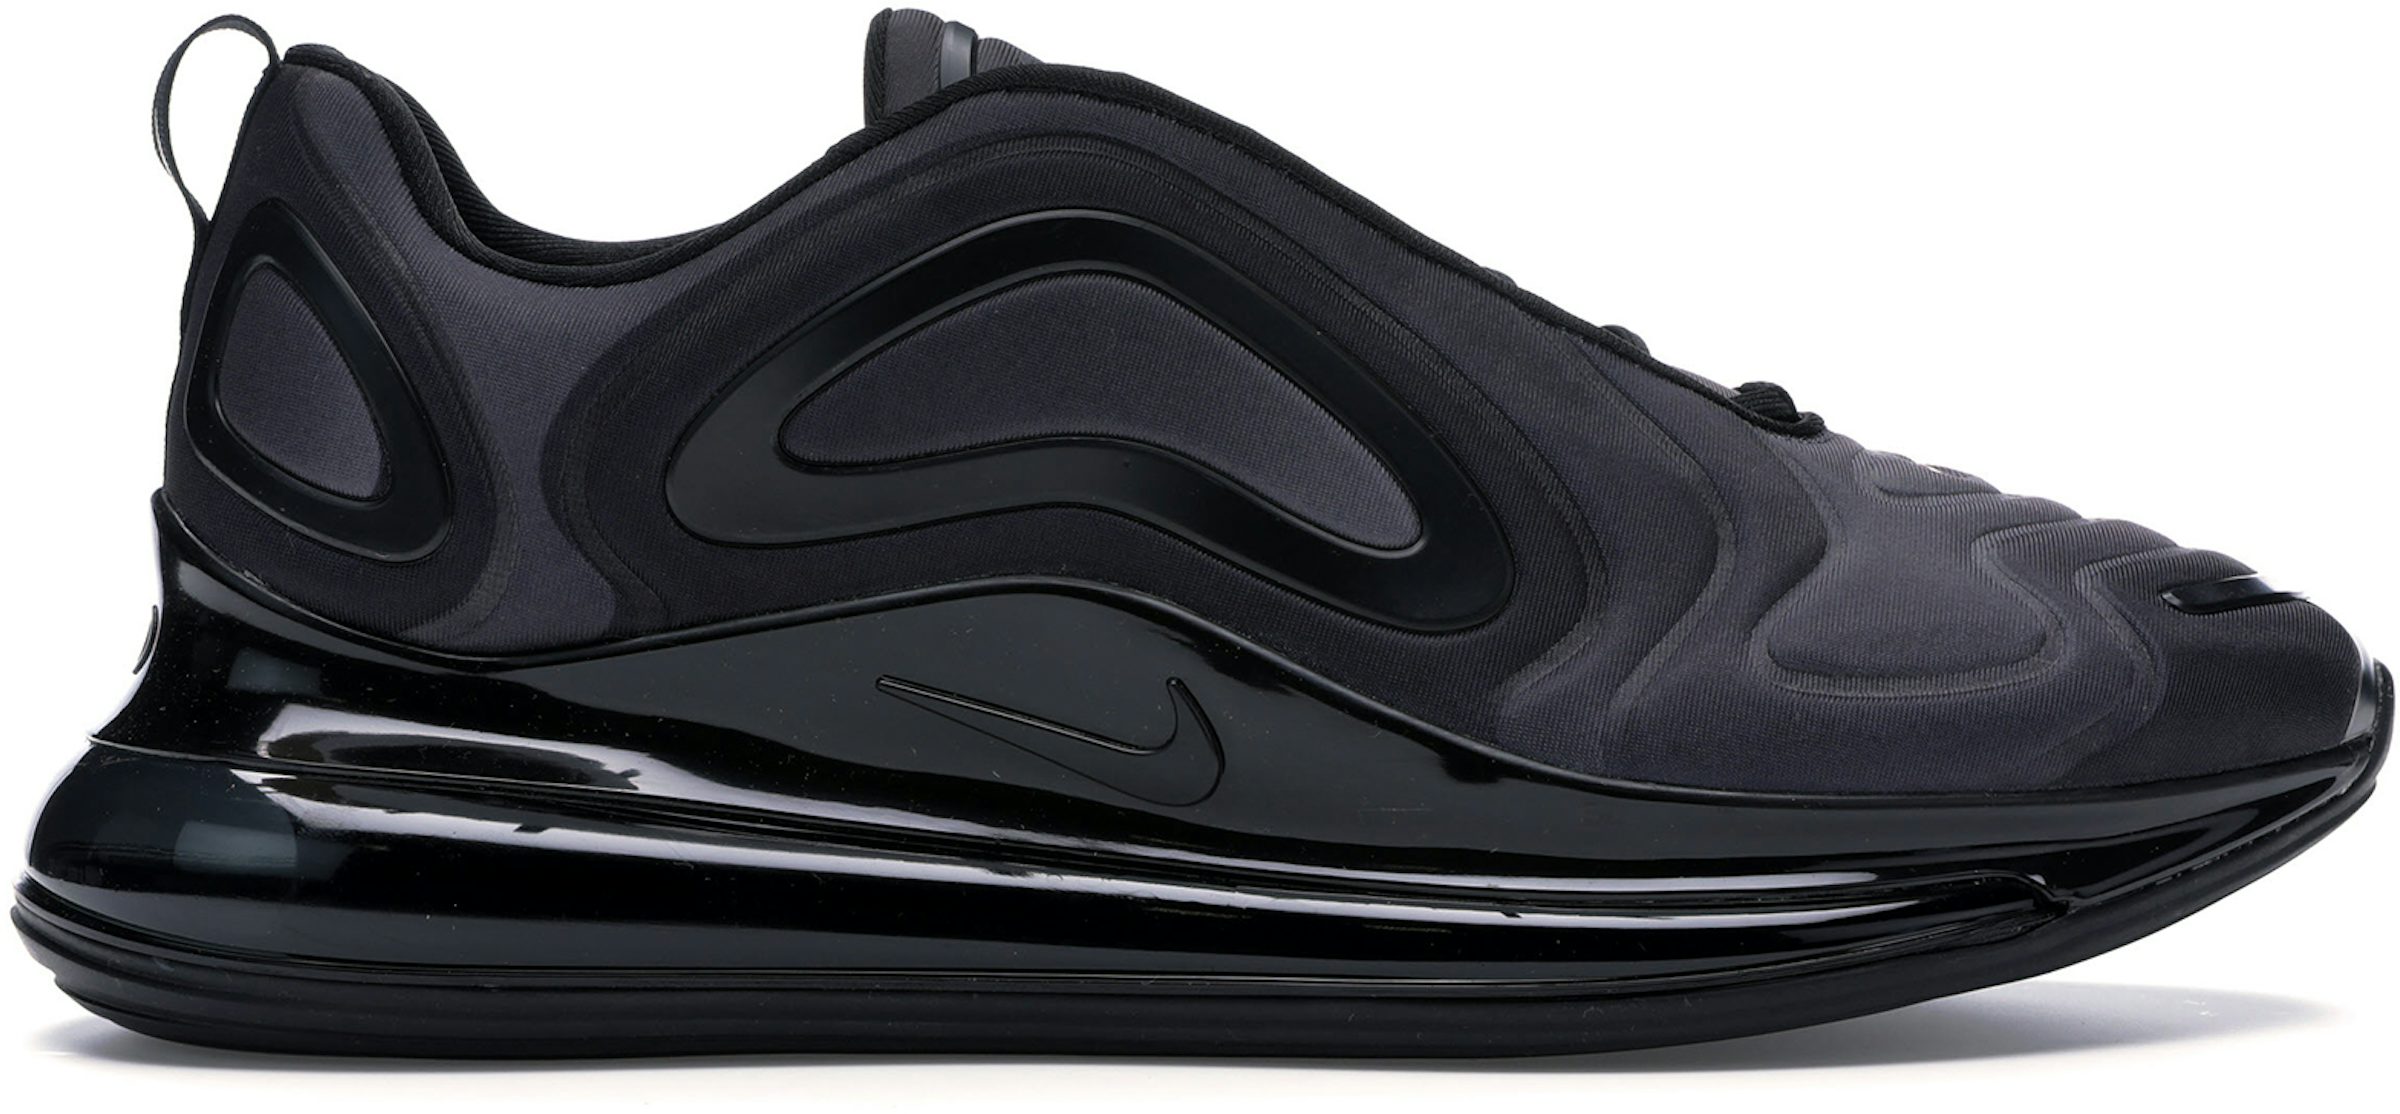 Dood in de wereld lamp Kaliber Buy Nike Air Max 720 Shoes & New Sneakers - StockX